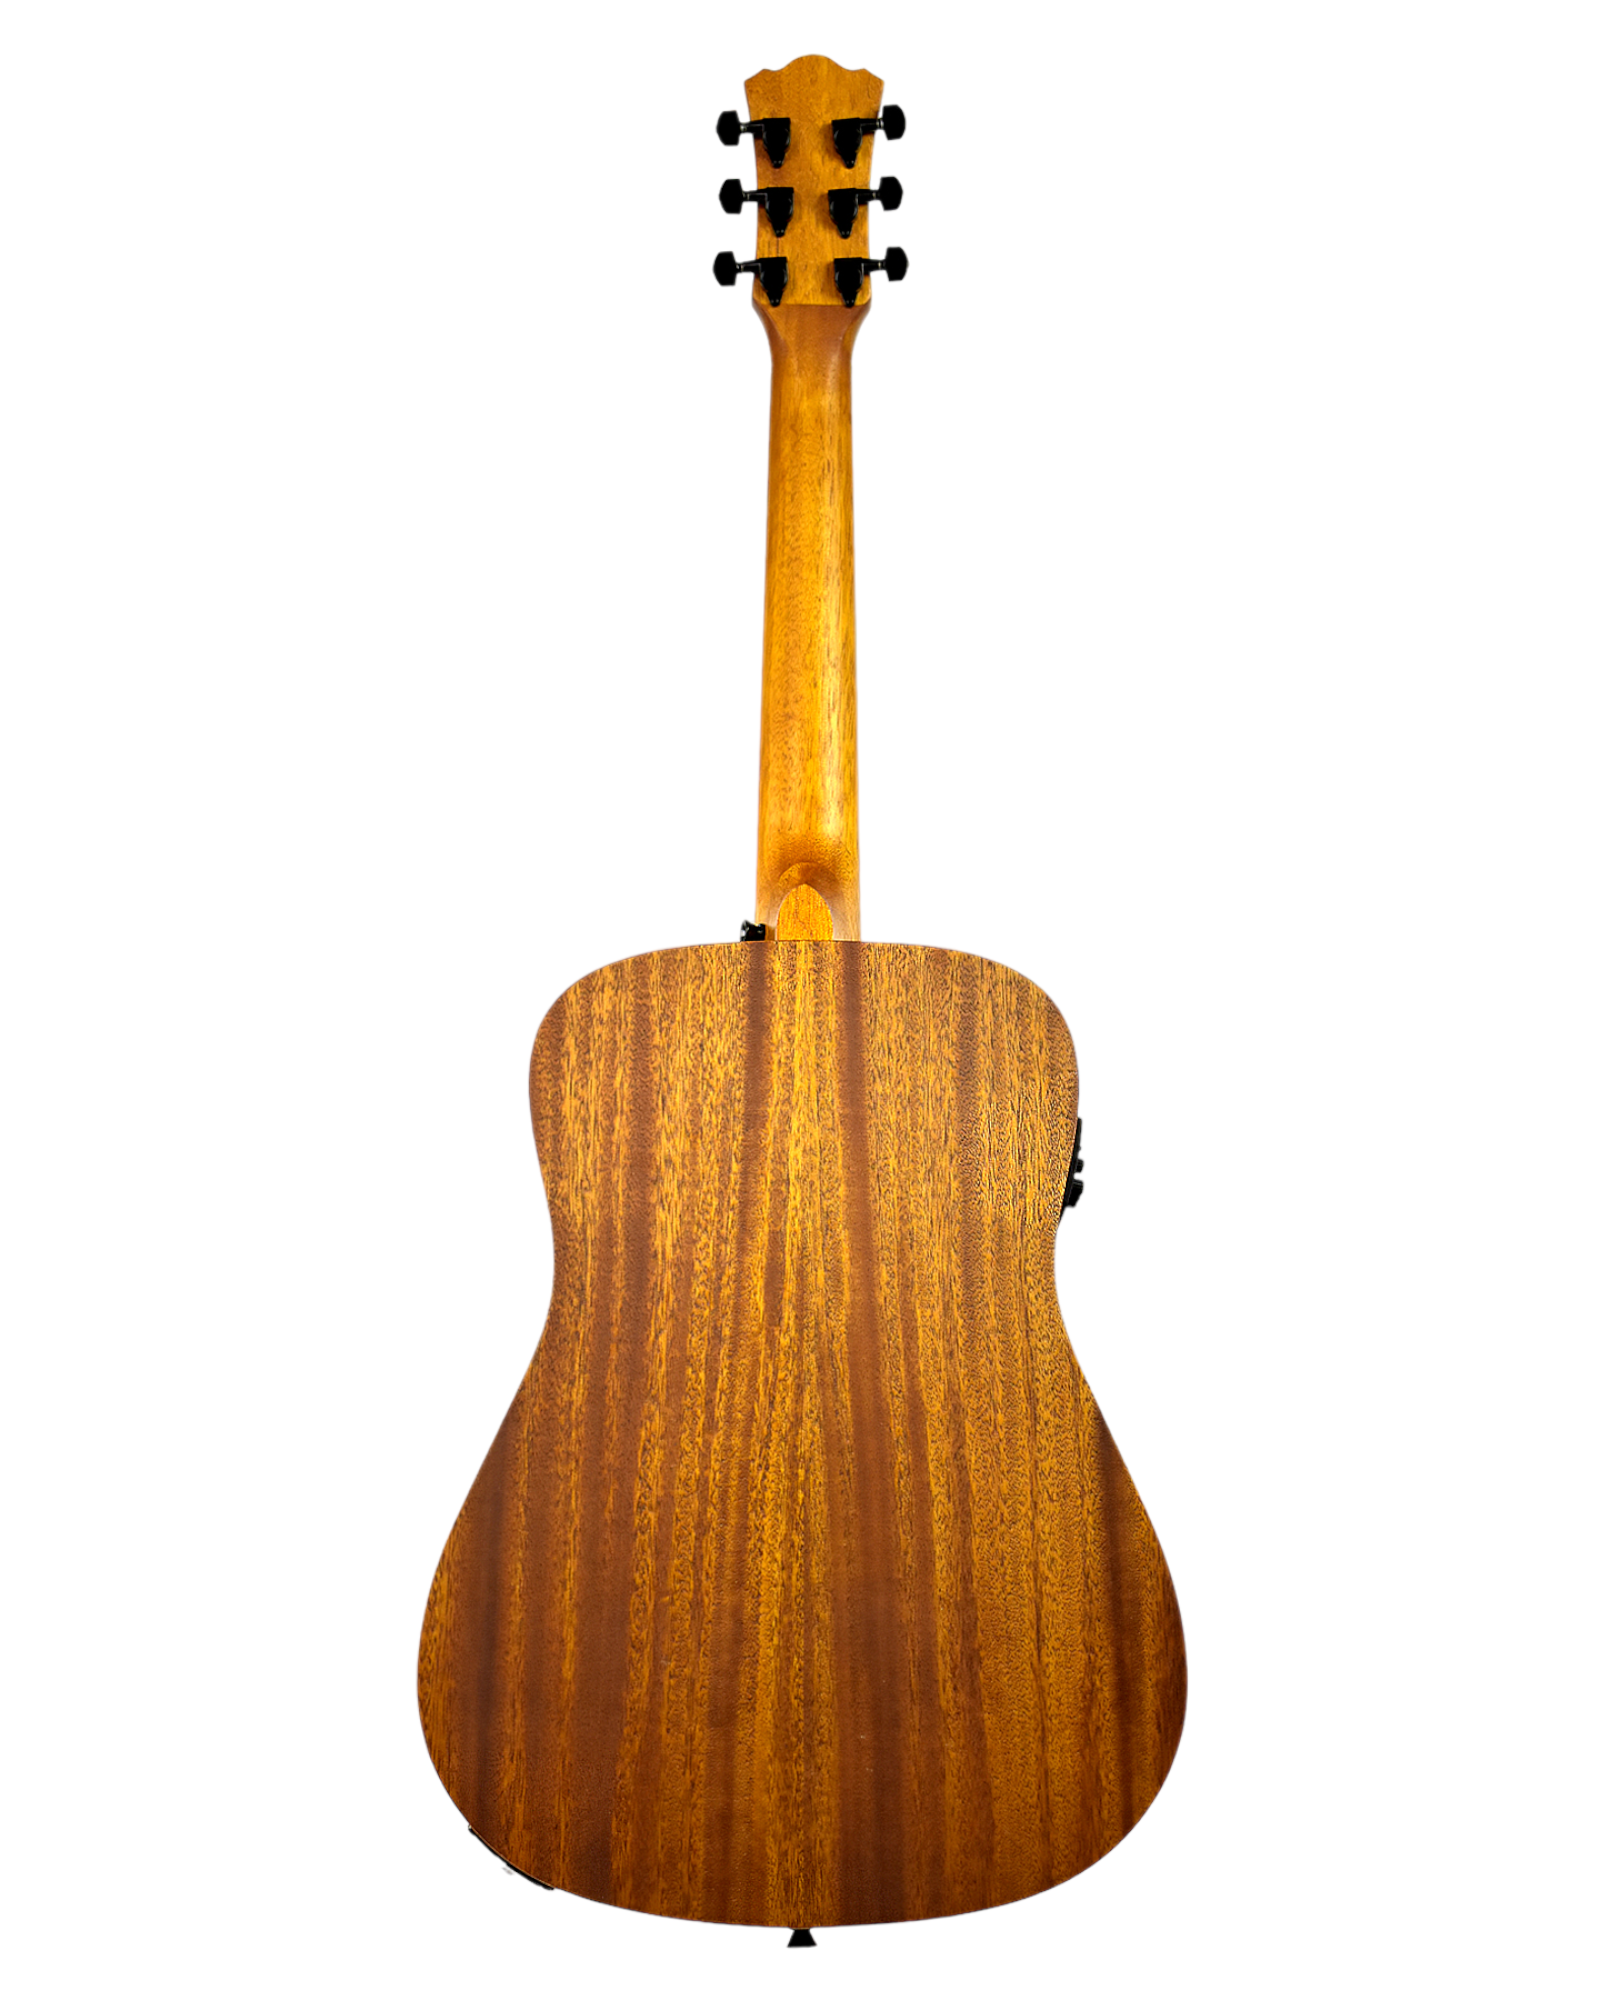 Caraya SAFAIR41EQ All Mahogany Dreadnought Acoustic Guitar, Built